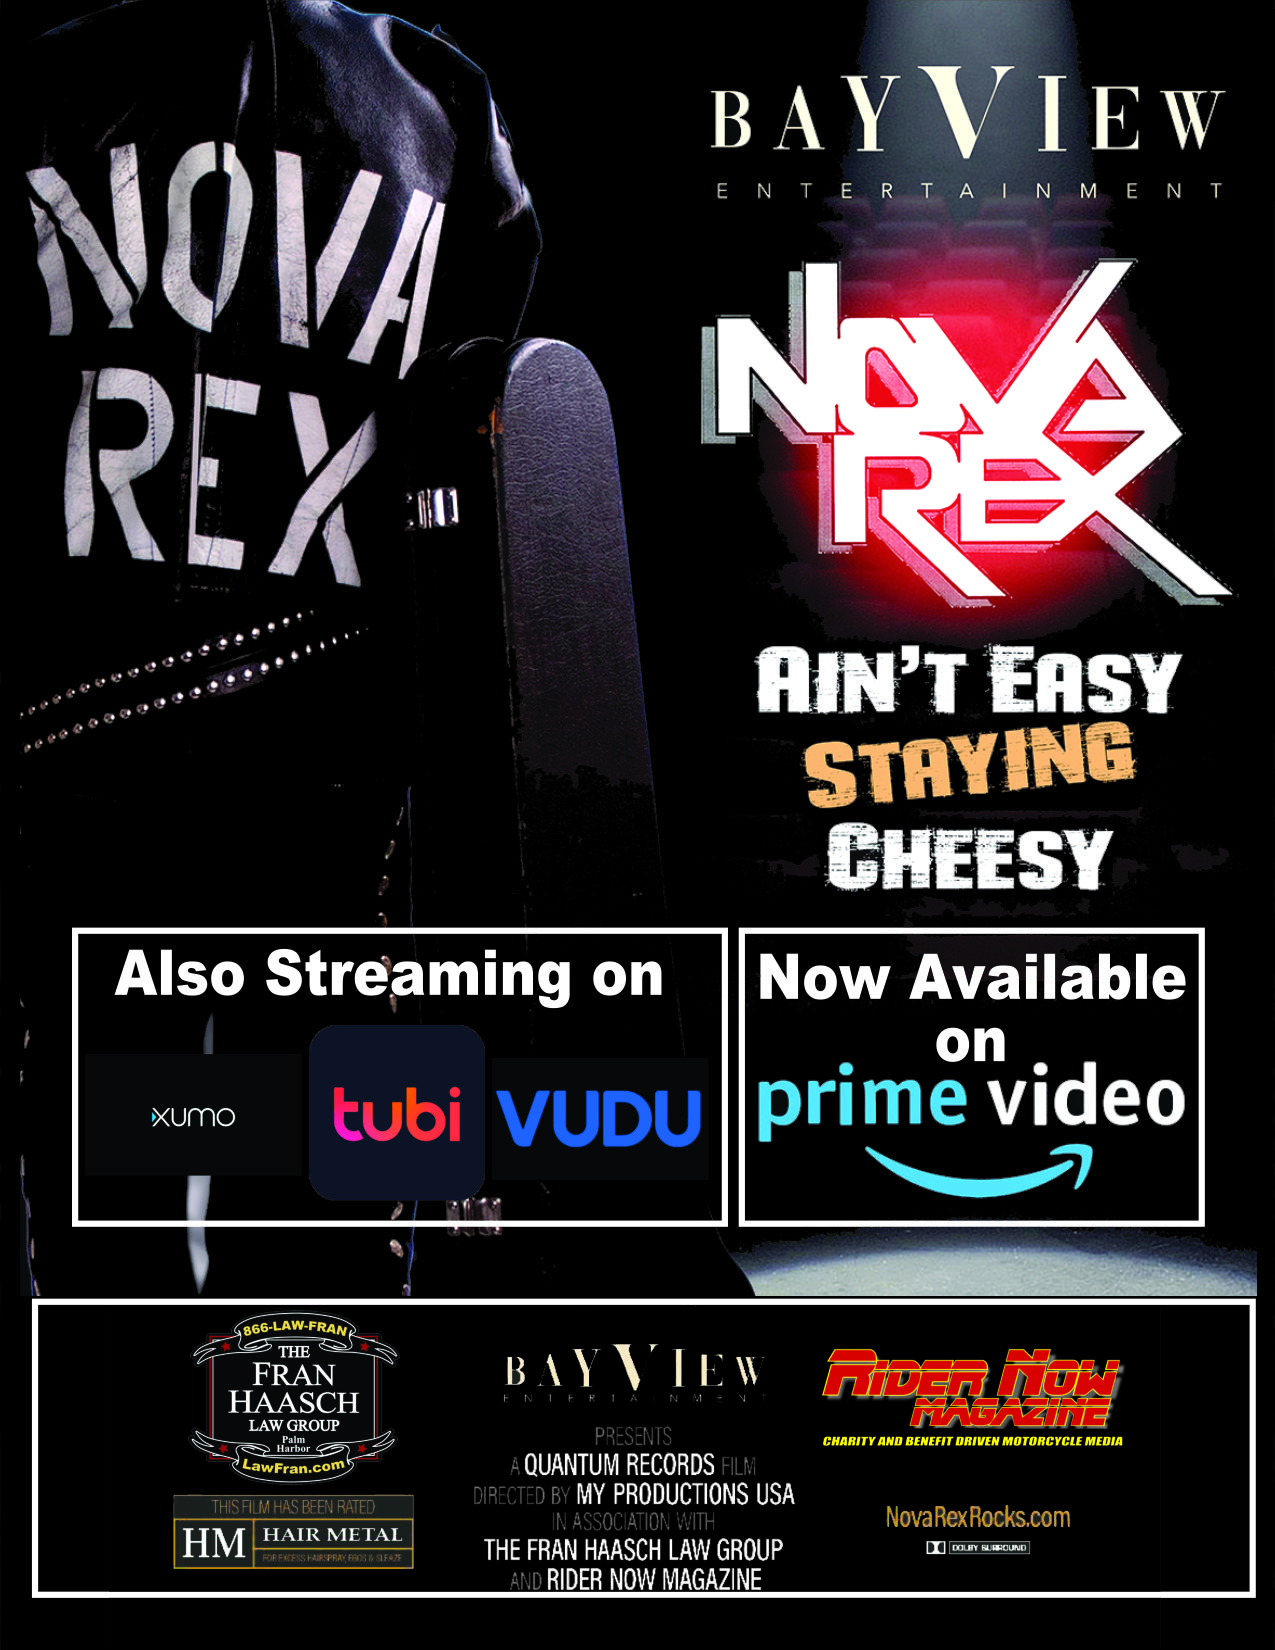 Nova Rex Ain't Easy Staying Cheesy Documentary Streaming